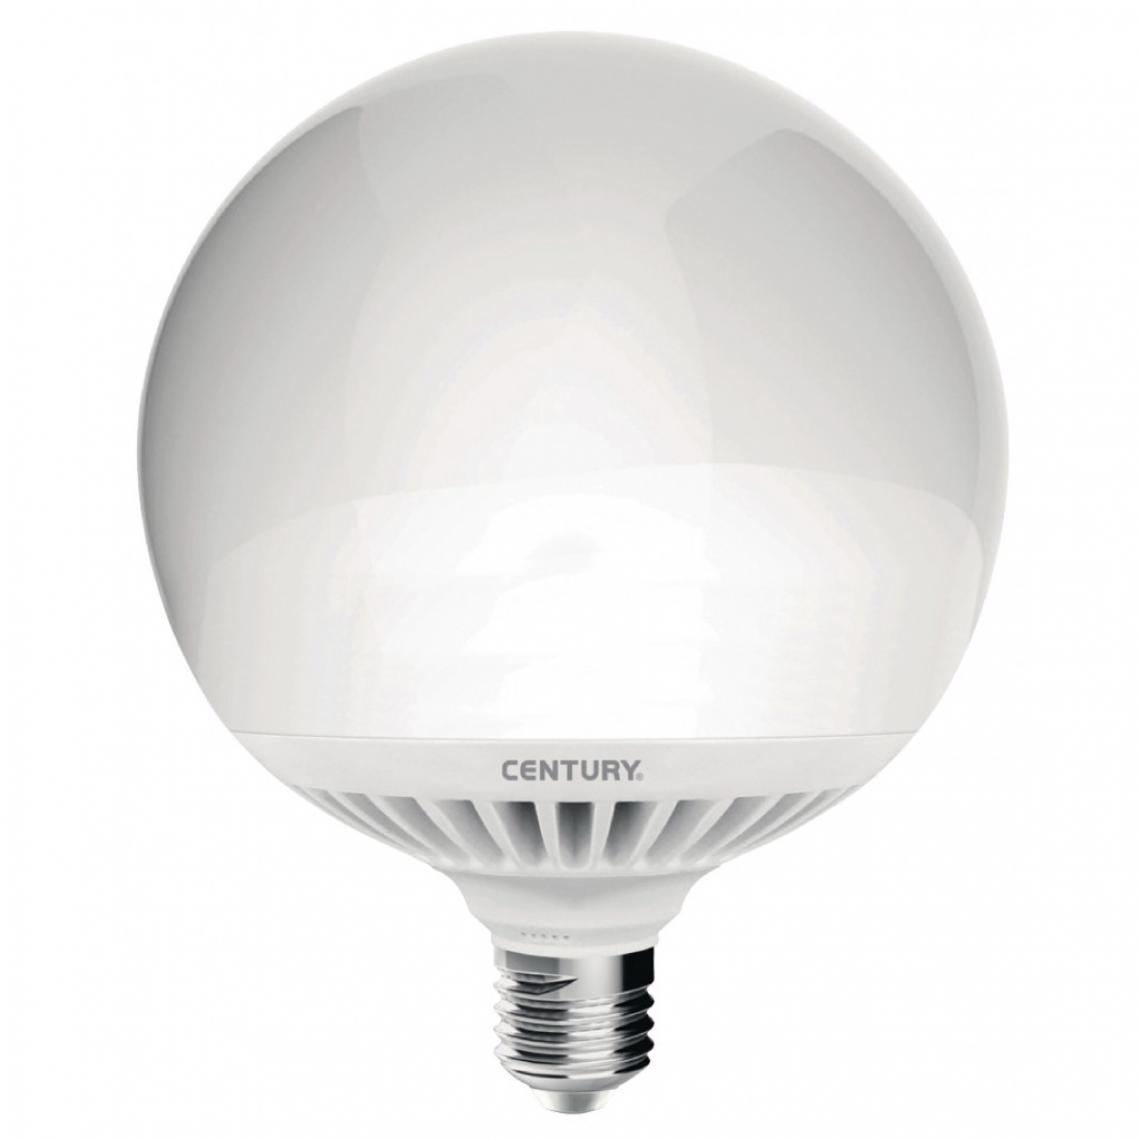 Alpexe - Ampoule LED E27 Globe 24 W 2100 lm 3000 K - Ampoules LED